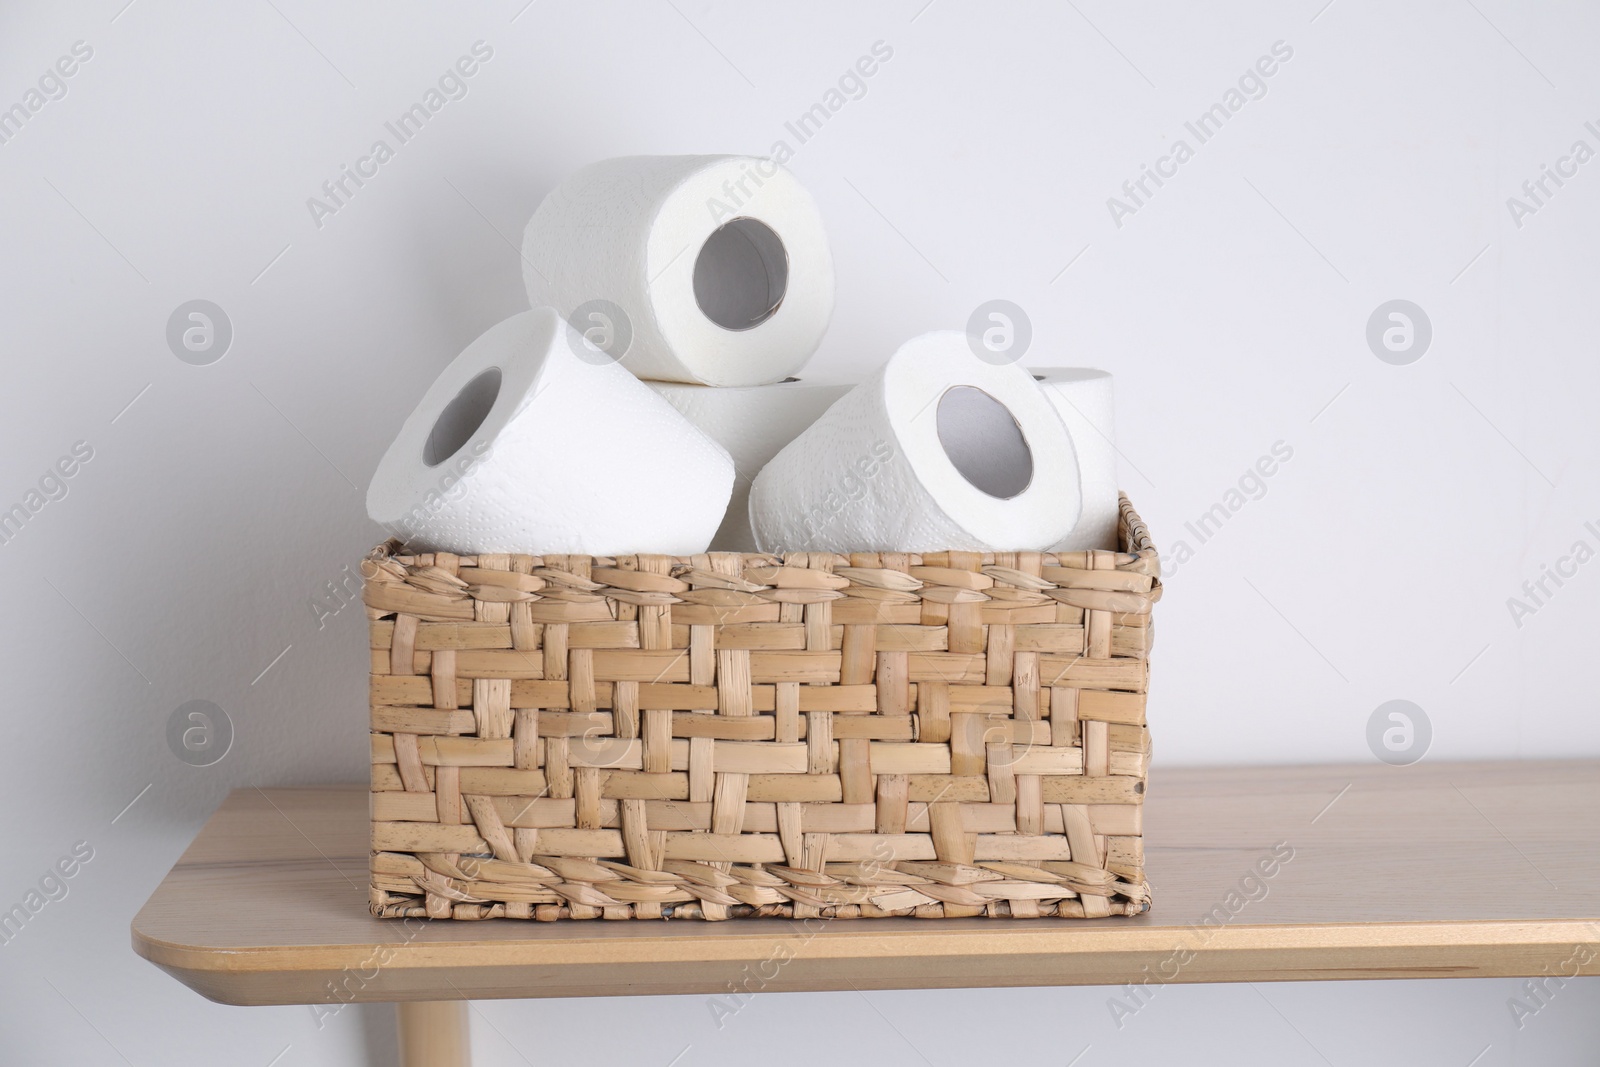 Photo of Toilet paper rolls in wicker basket on wooden table near white wall